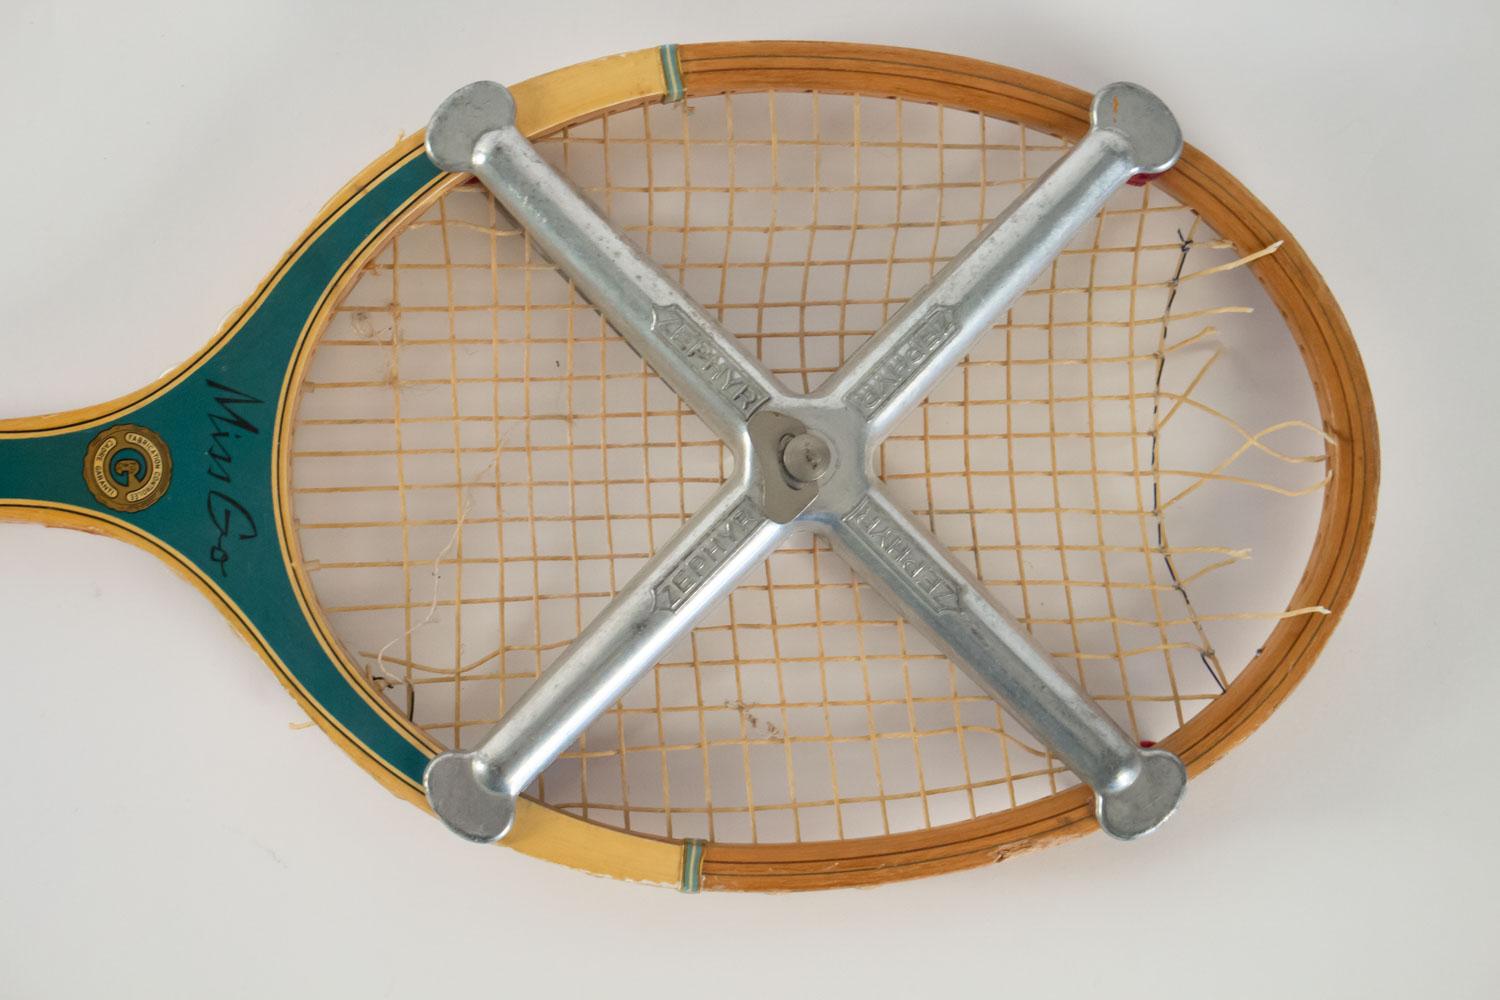 Tennis racket, Miss Go, pro, mid-20th century. 
Measures: H 70cm, W 23cm, W 3cm.